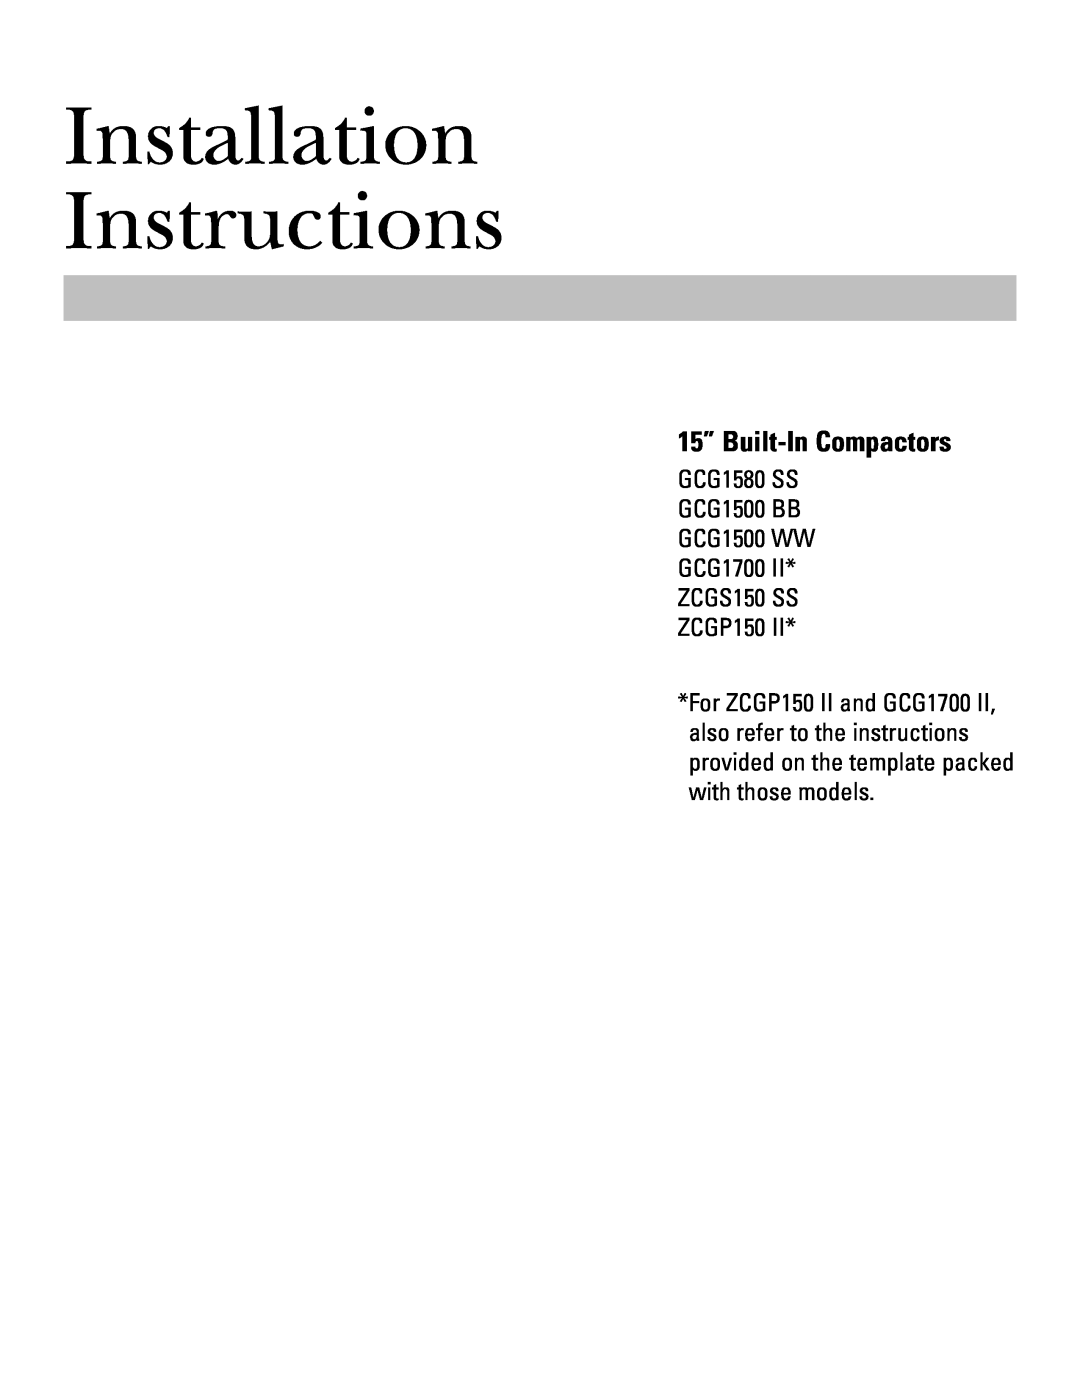 GE GCG1500 BB, GCG1700 II, GCG1500 WW installation instructions Installation Instructions, 15” Built-In Compactors 